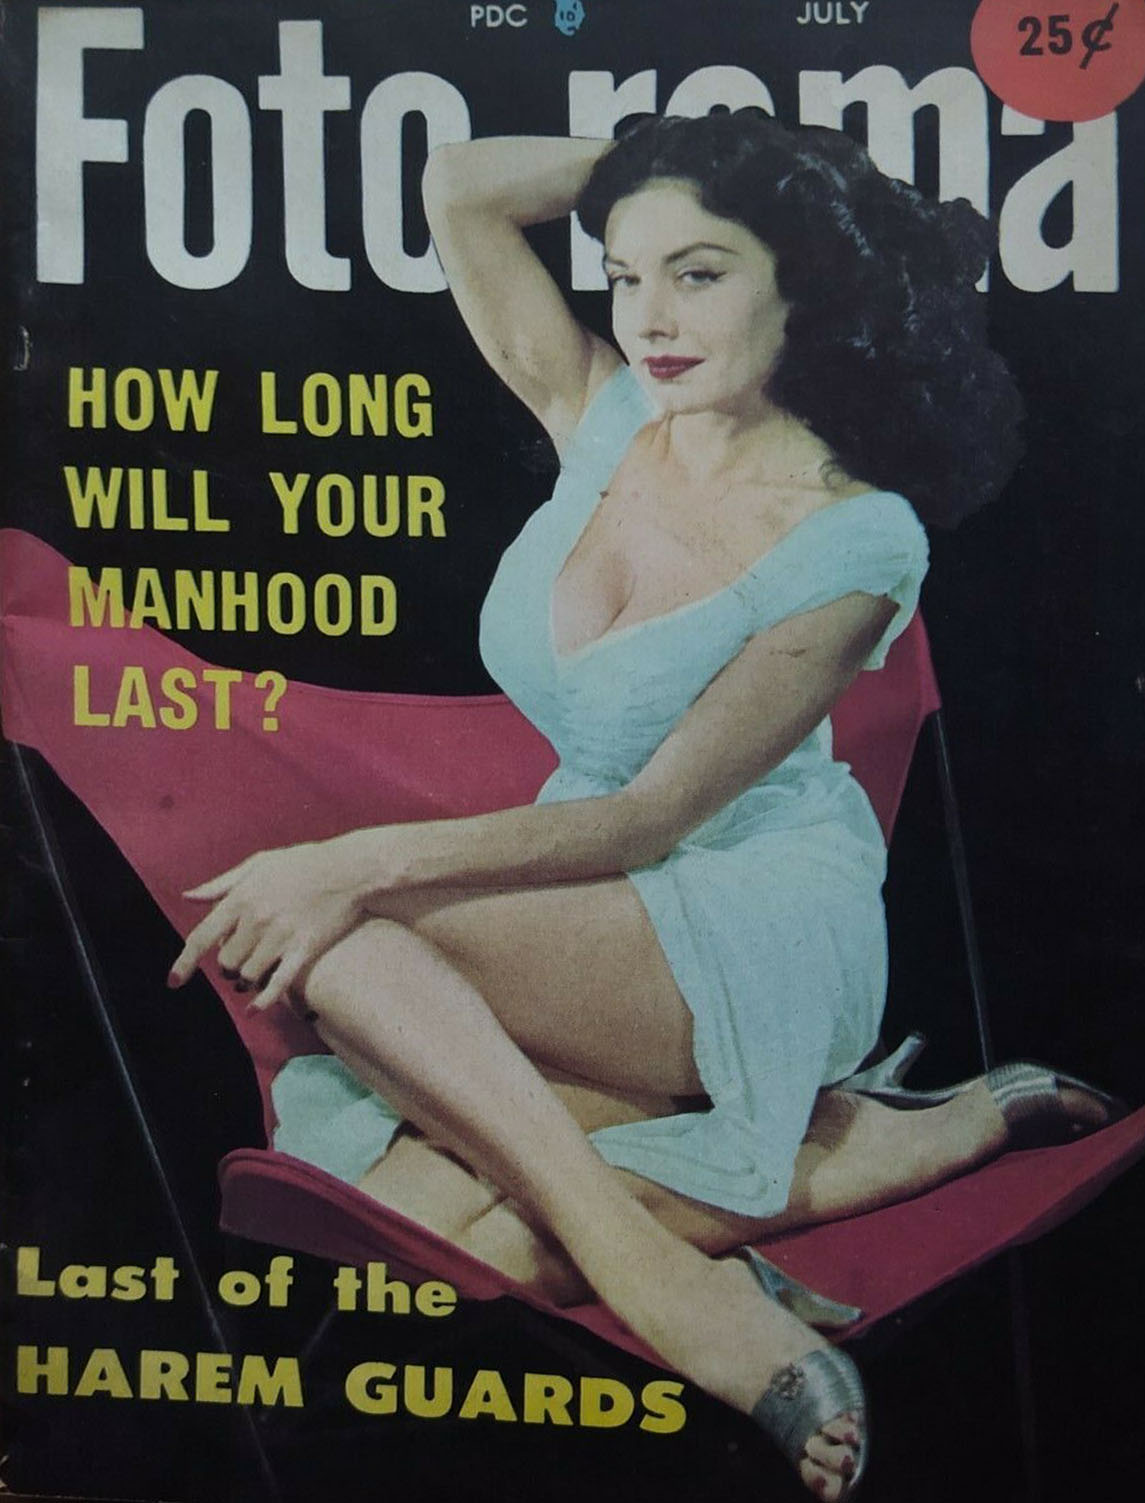 Foto-rama July 1956 magazine back issue Foto-rama magizine back copy 